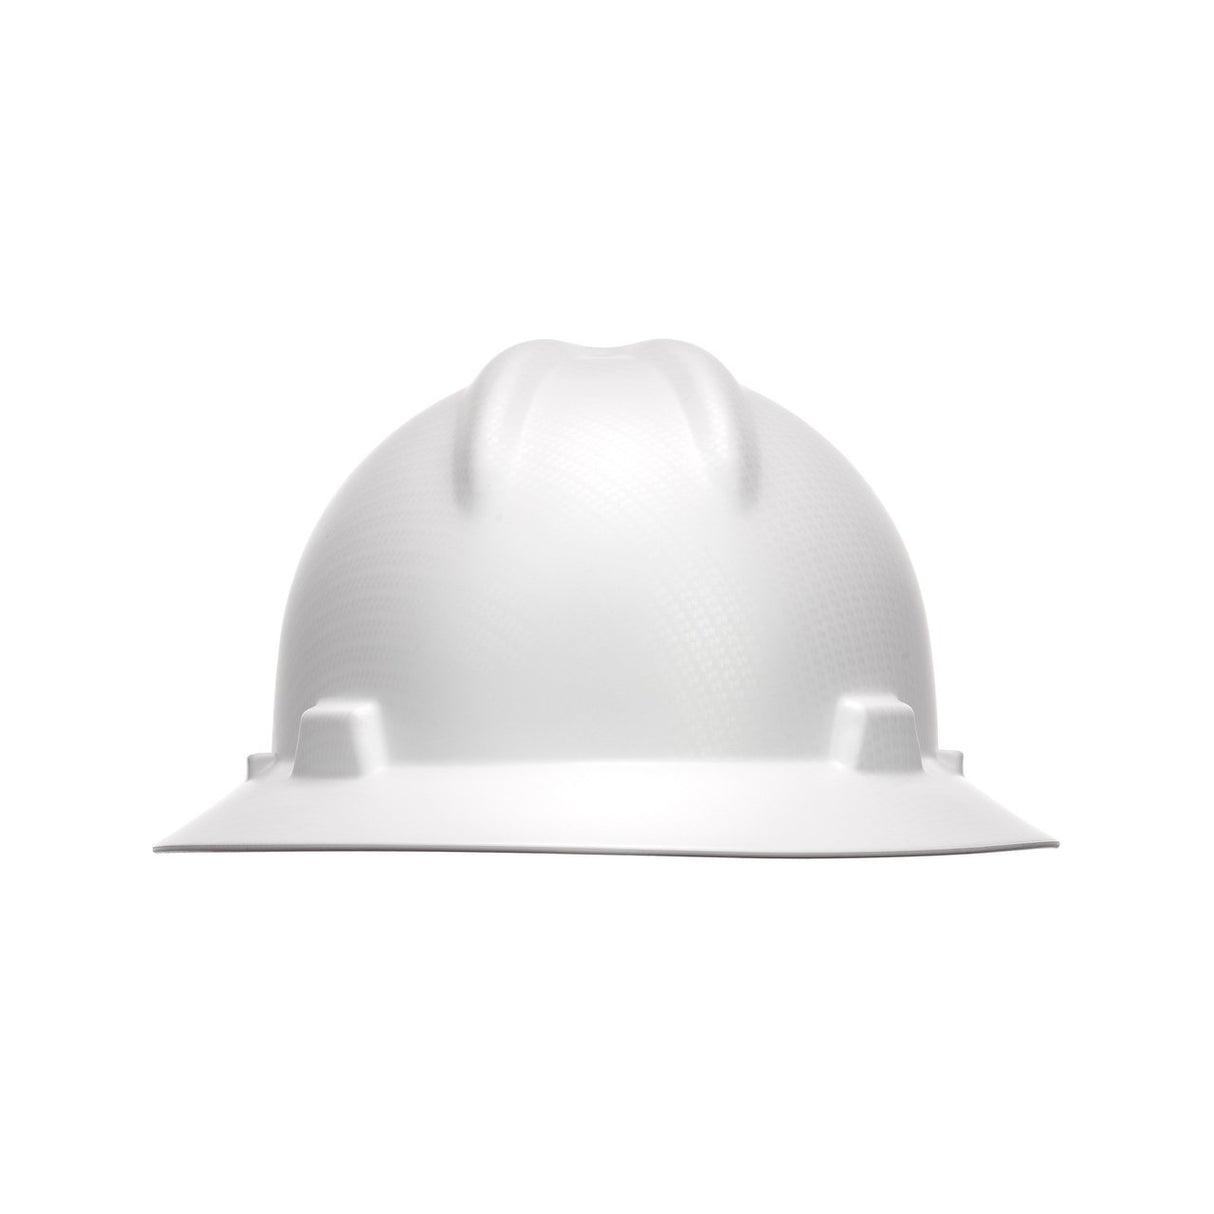 MSA V-Gard® Hydro Dipped Full Brim Hard Hat with Ratchet Suspension